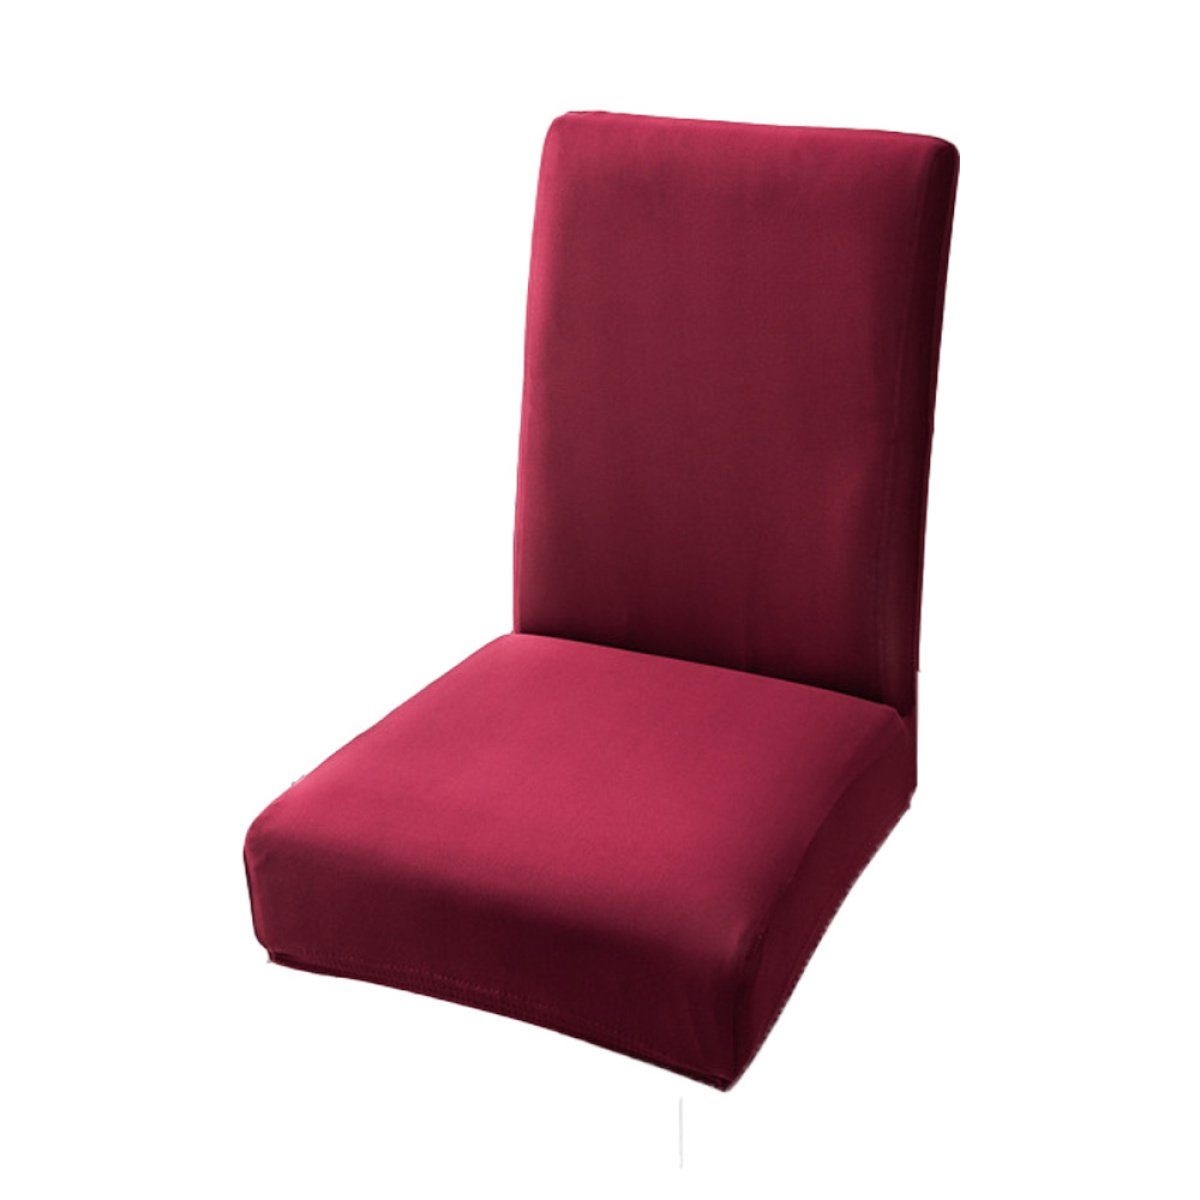 Deko, für Abnehmbare Stuhlbezug Stuhlhusse Stuhlhussen Juoungle Universal rot Stretch